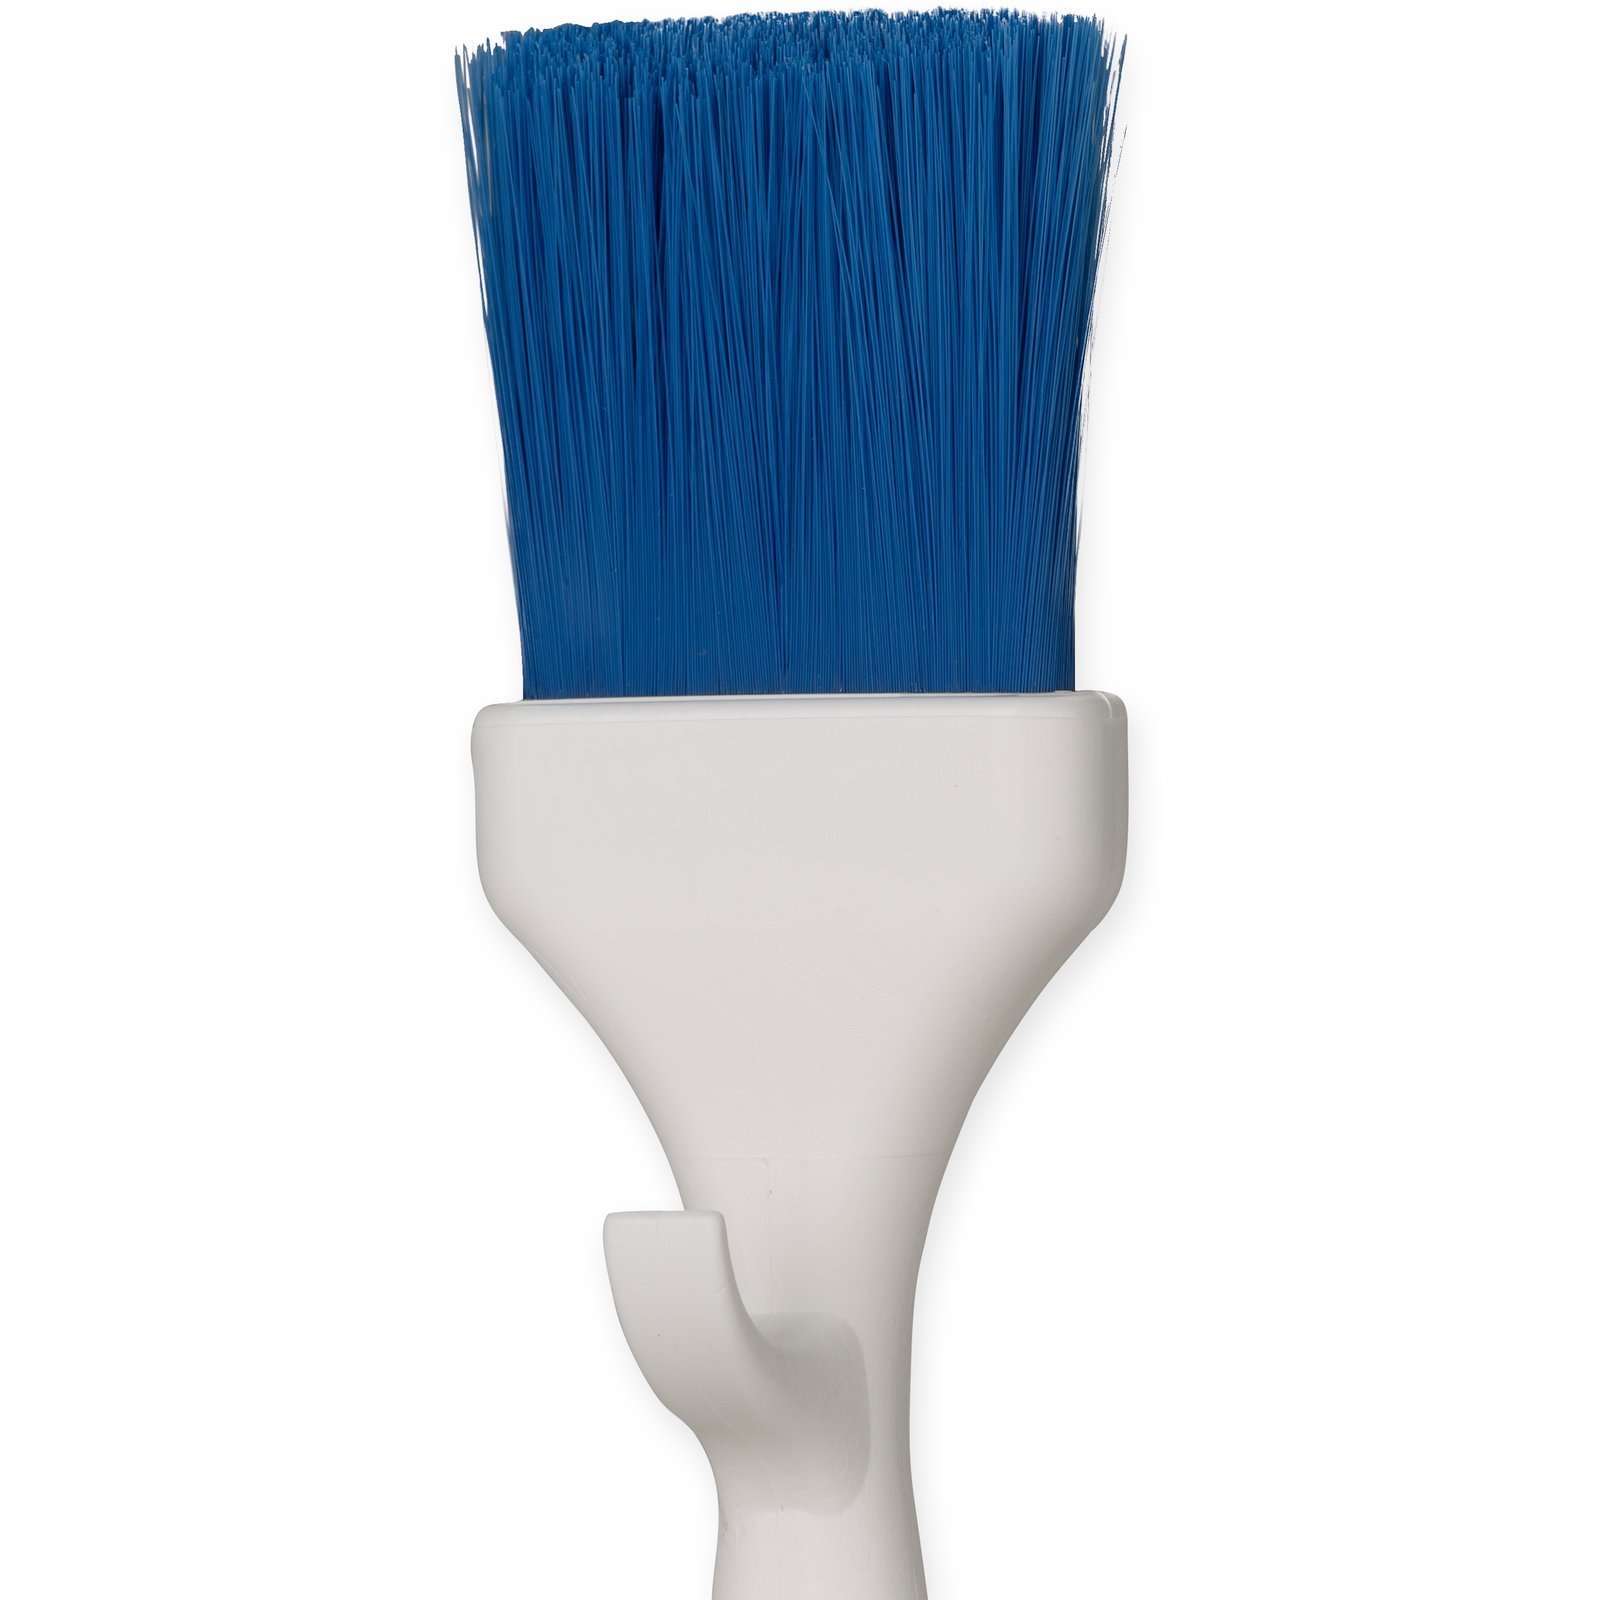 4040114 - Sparta® Meteor ® Nylon Bristle Basting Brush 2 - Blue